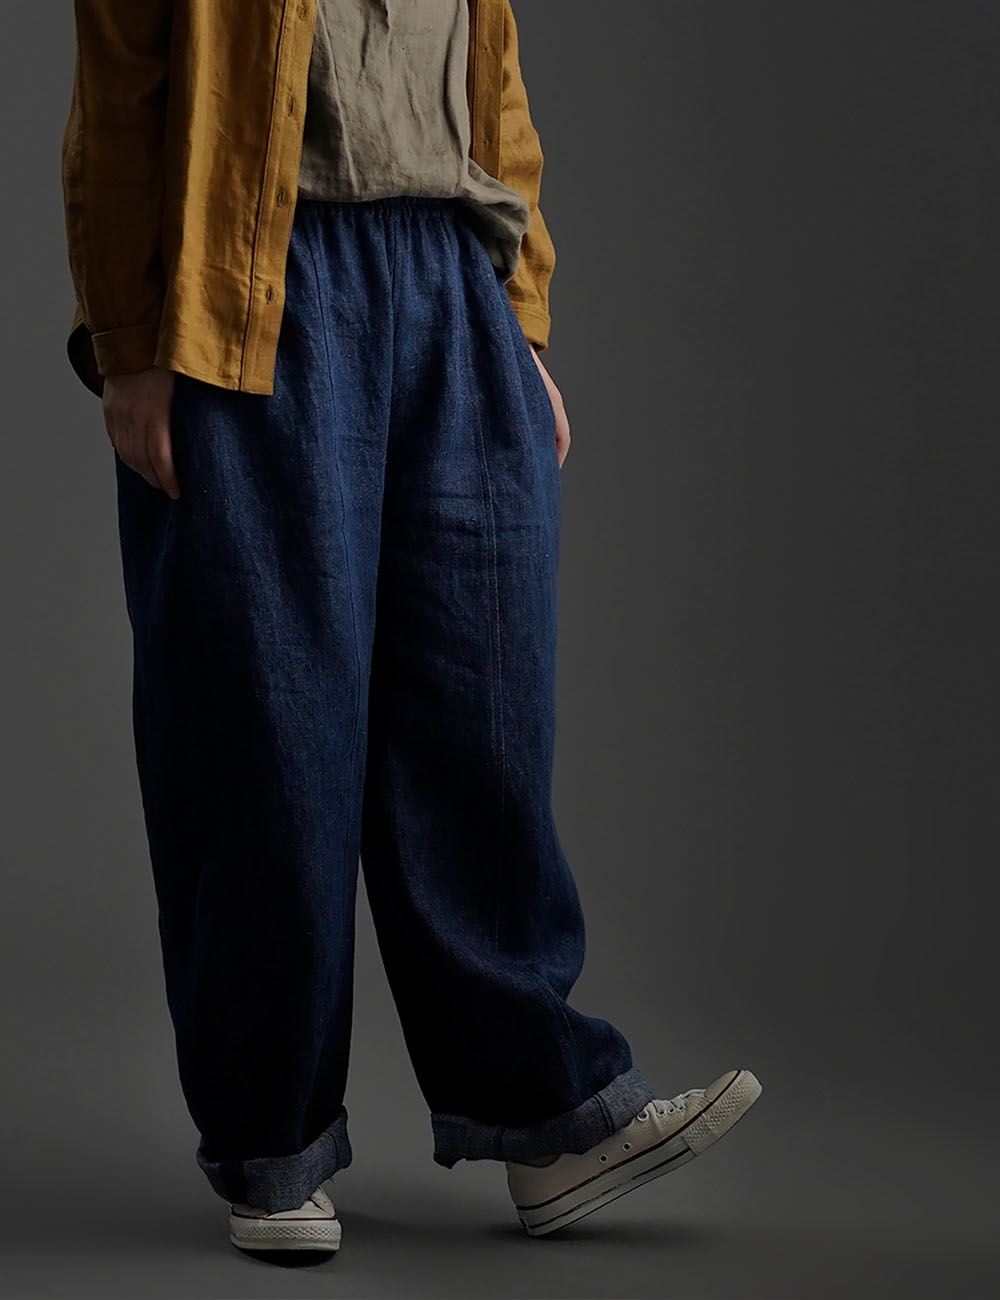 【wafu】Linen denim pants　デニムバギーパンツ 男女兼用　/インディゴ b011b-ind3